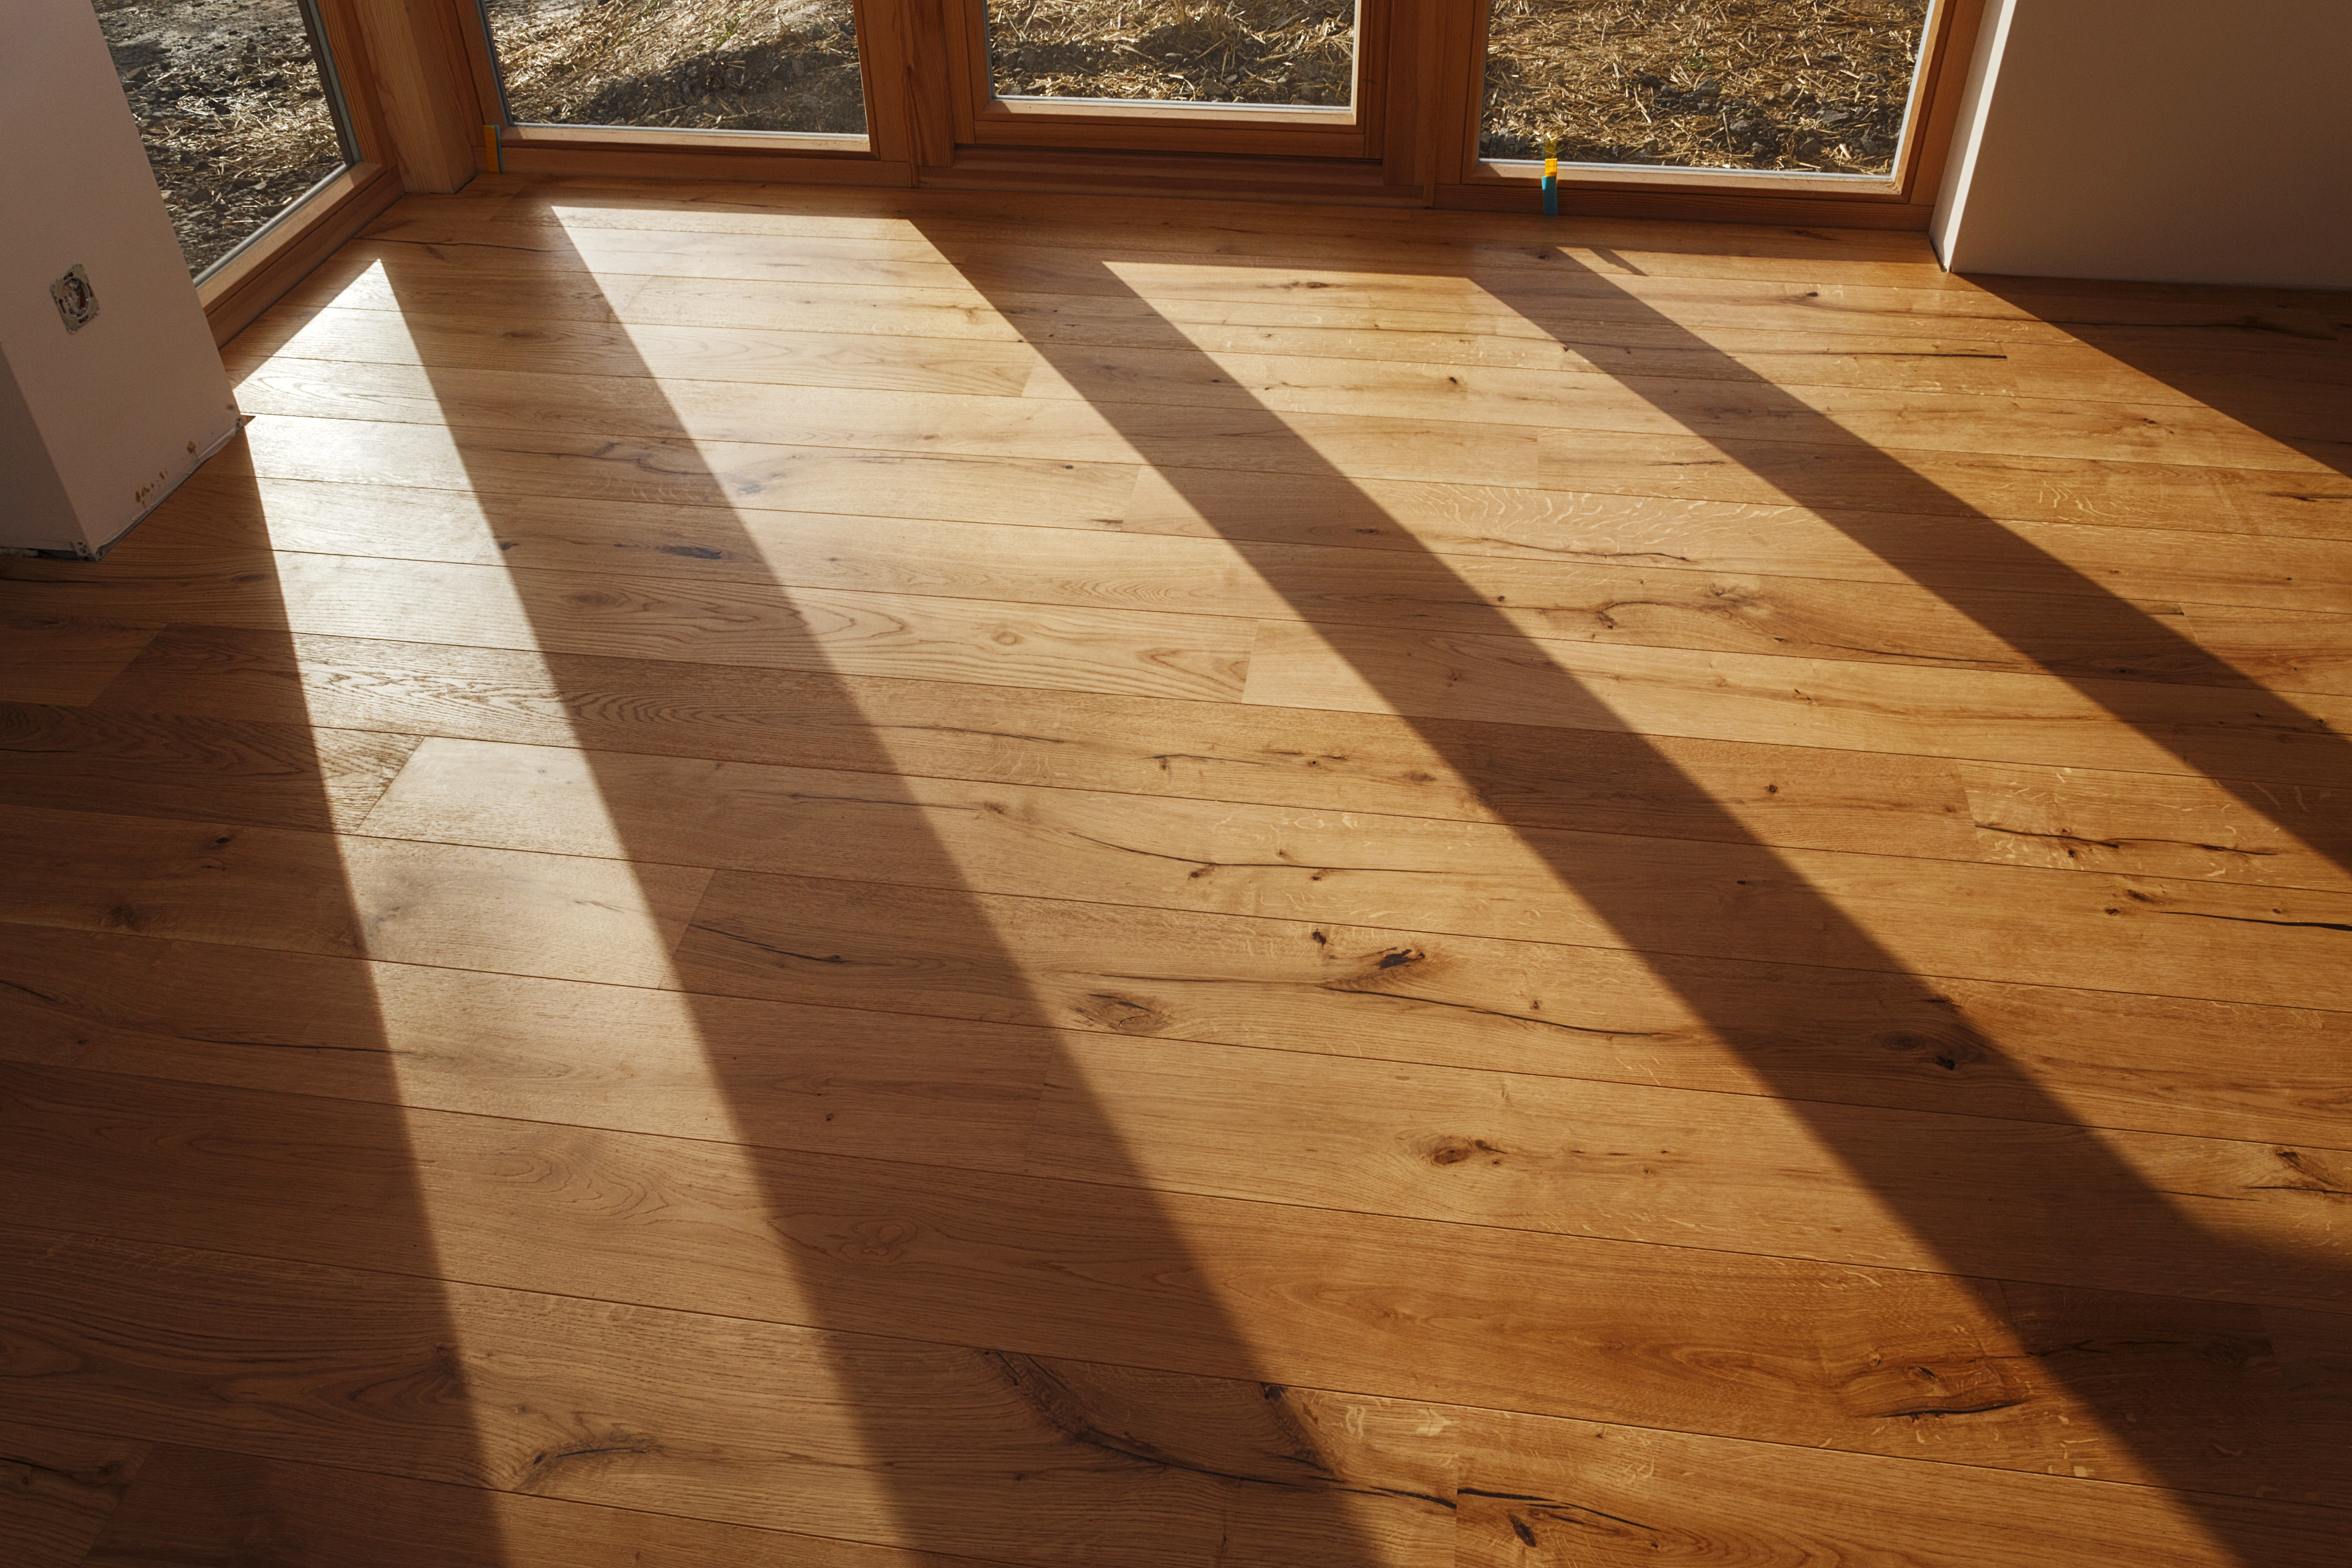 Wood Flooring Hardwood Versus, Hardwood Floor Cost Vs Laminate